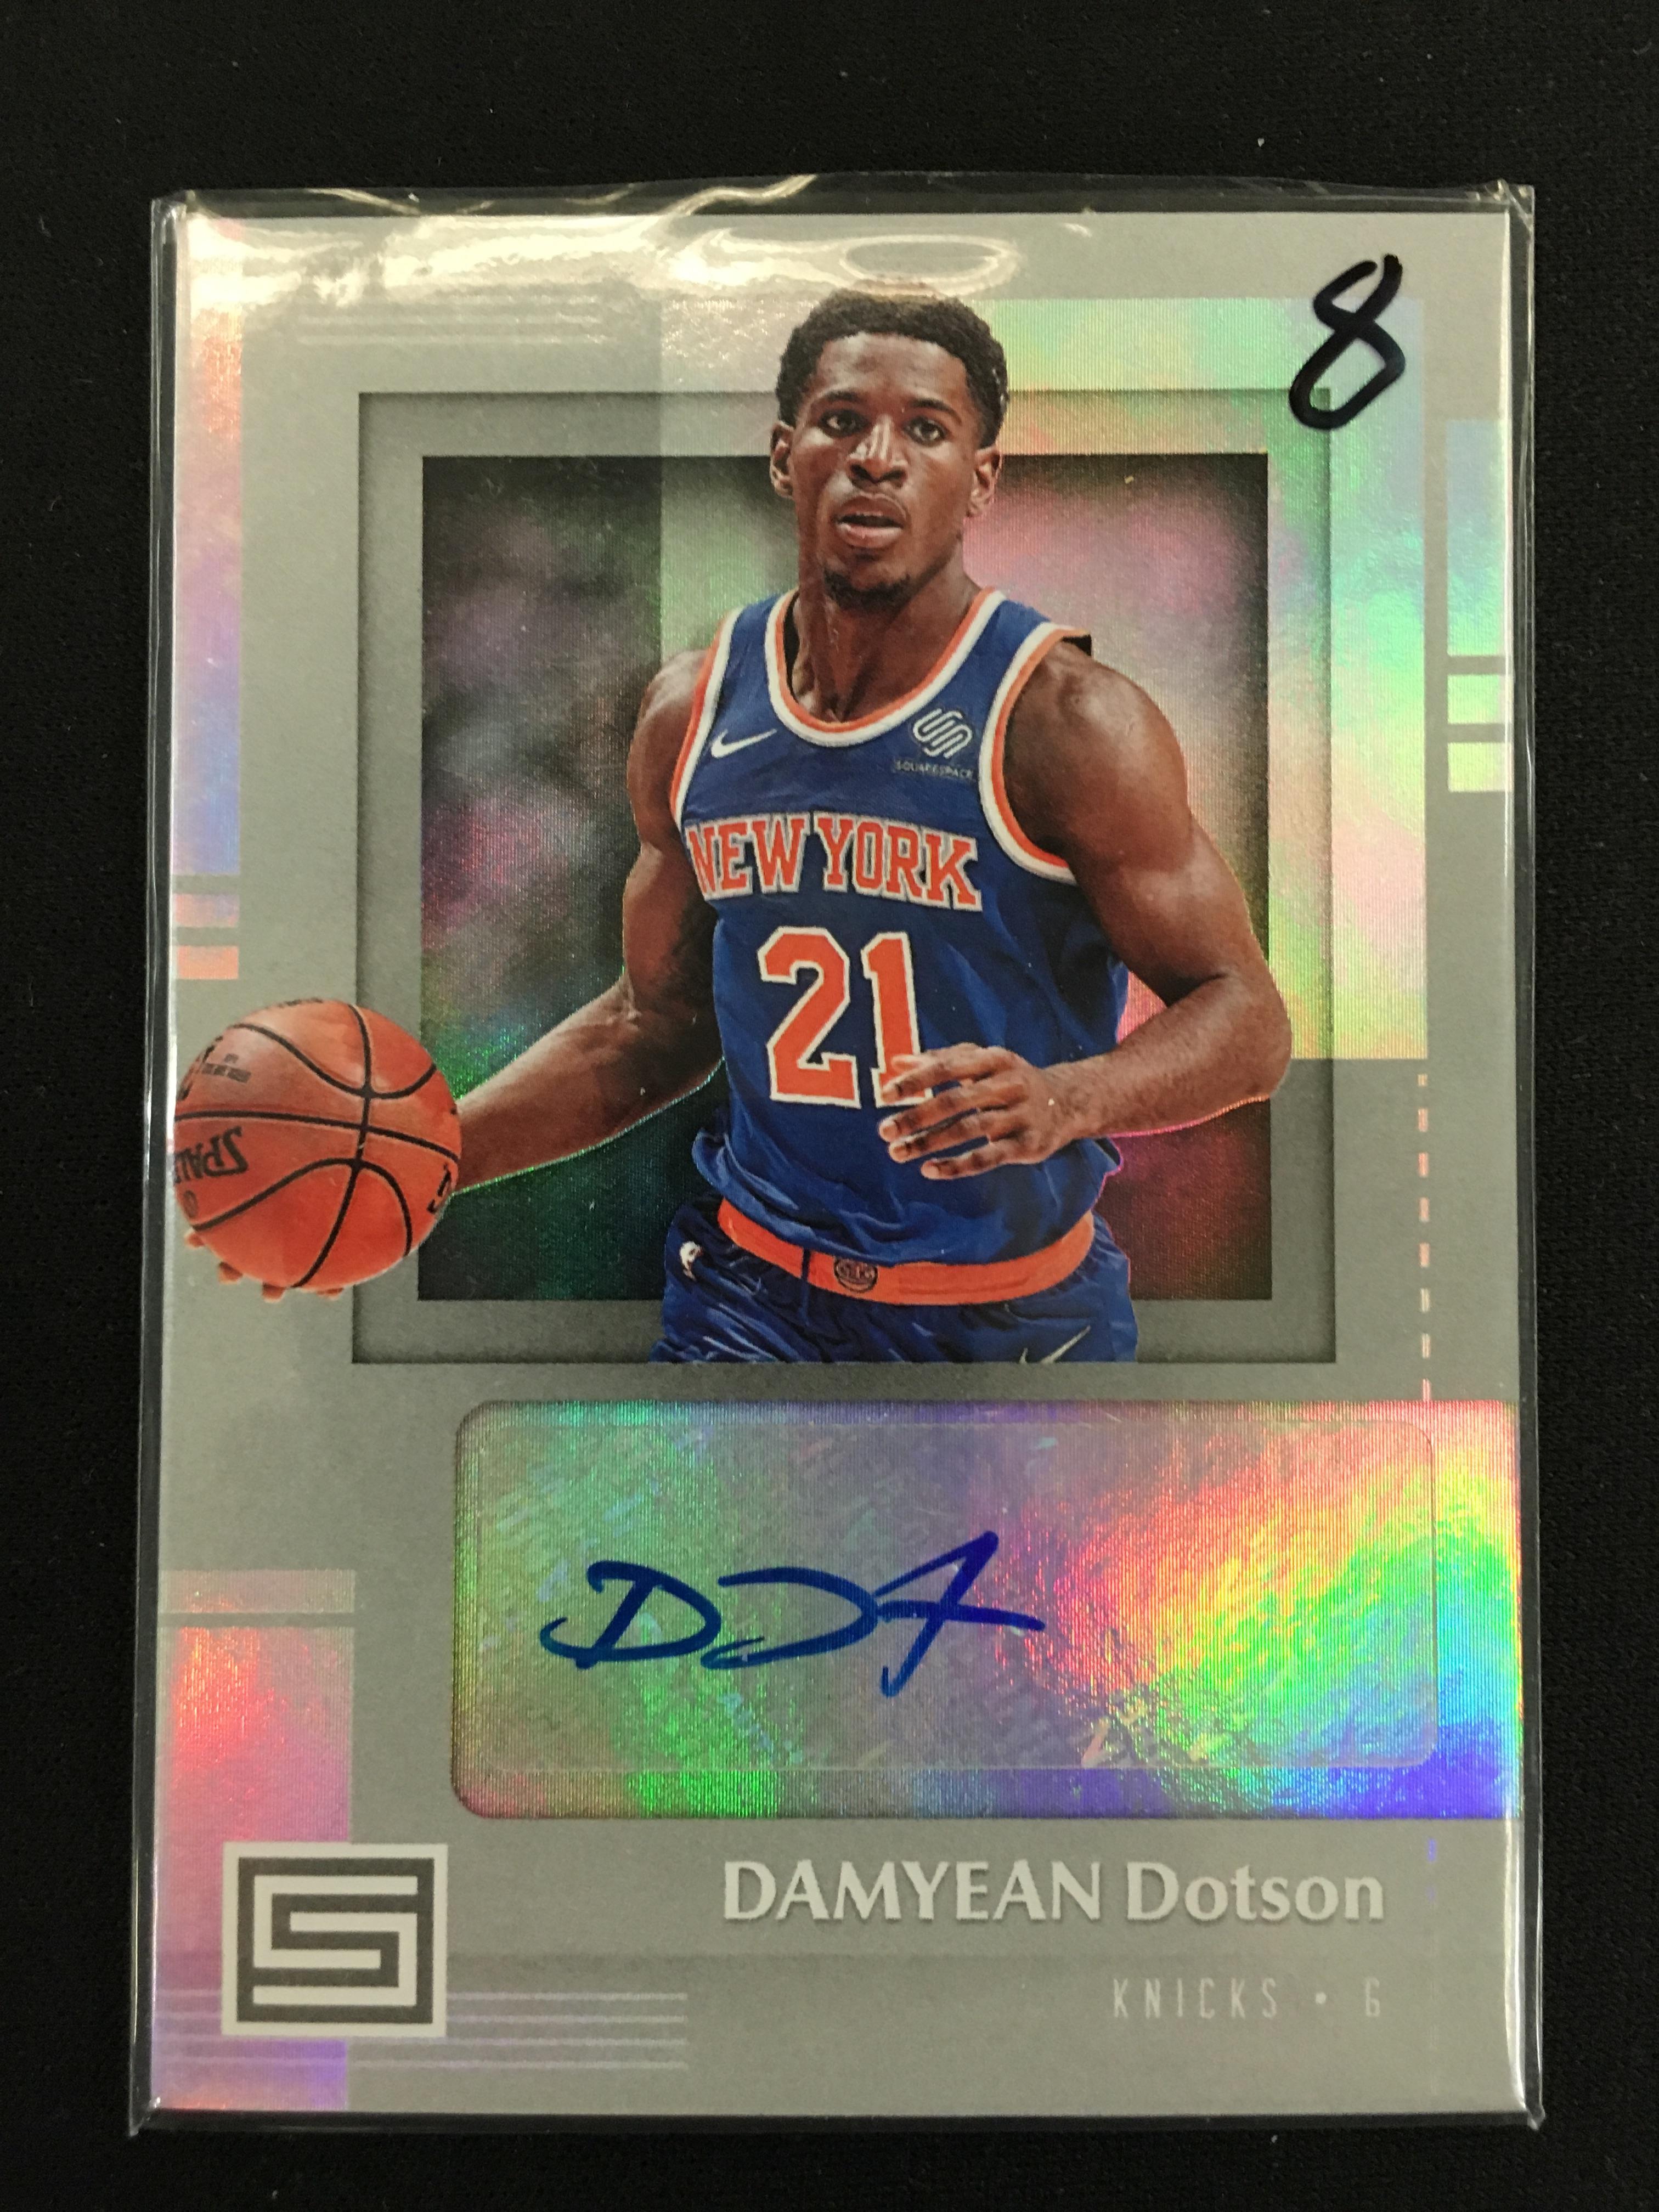 2017-18 Panini Signatures Damyean Dotson Knicks Rookie Autograph Card